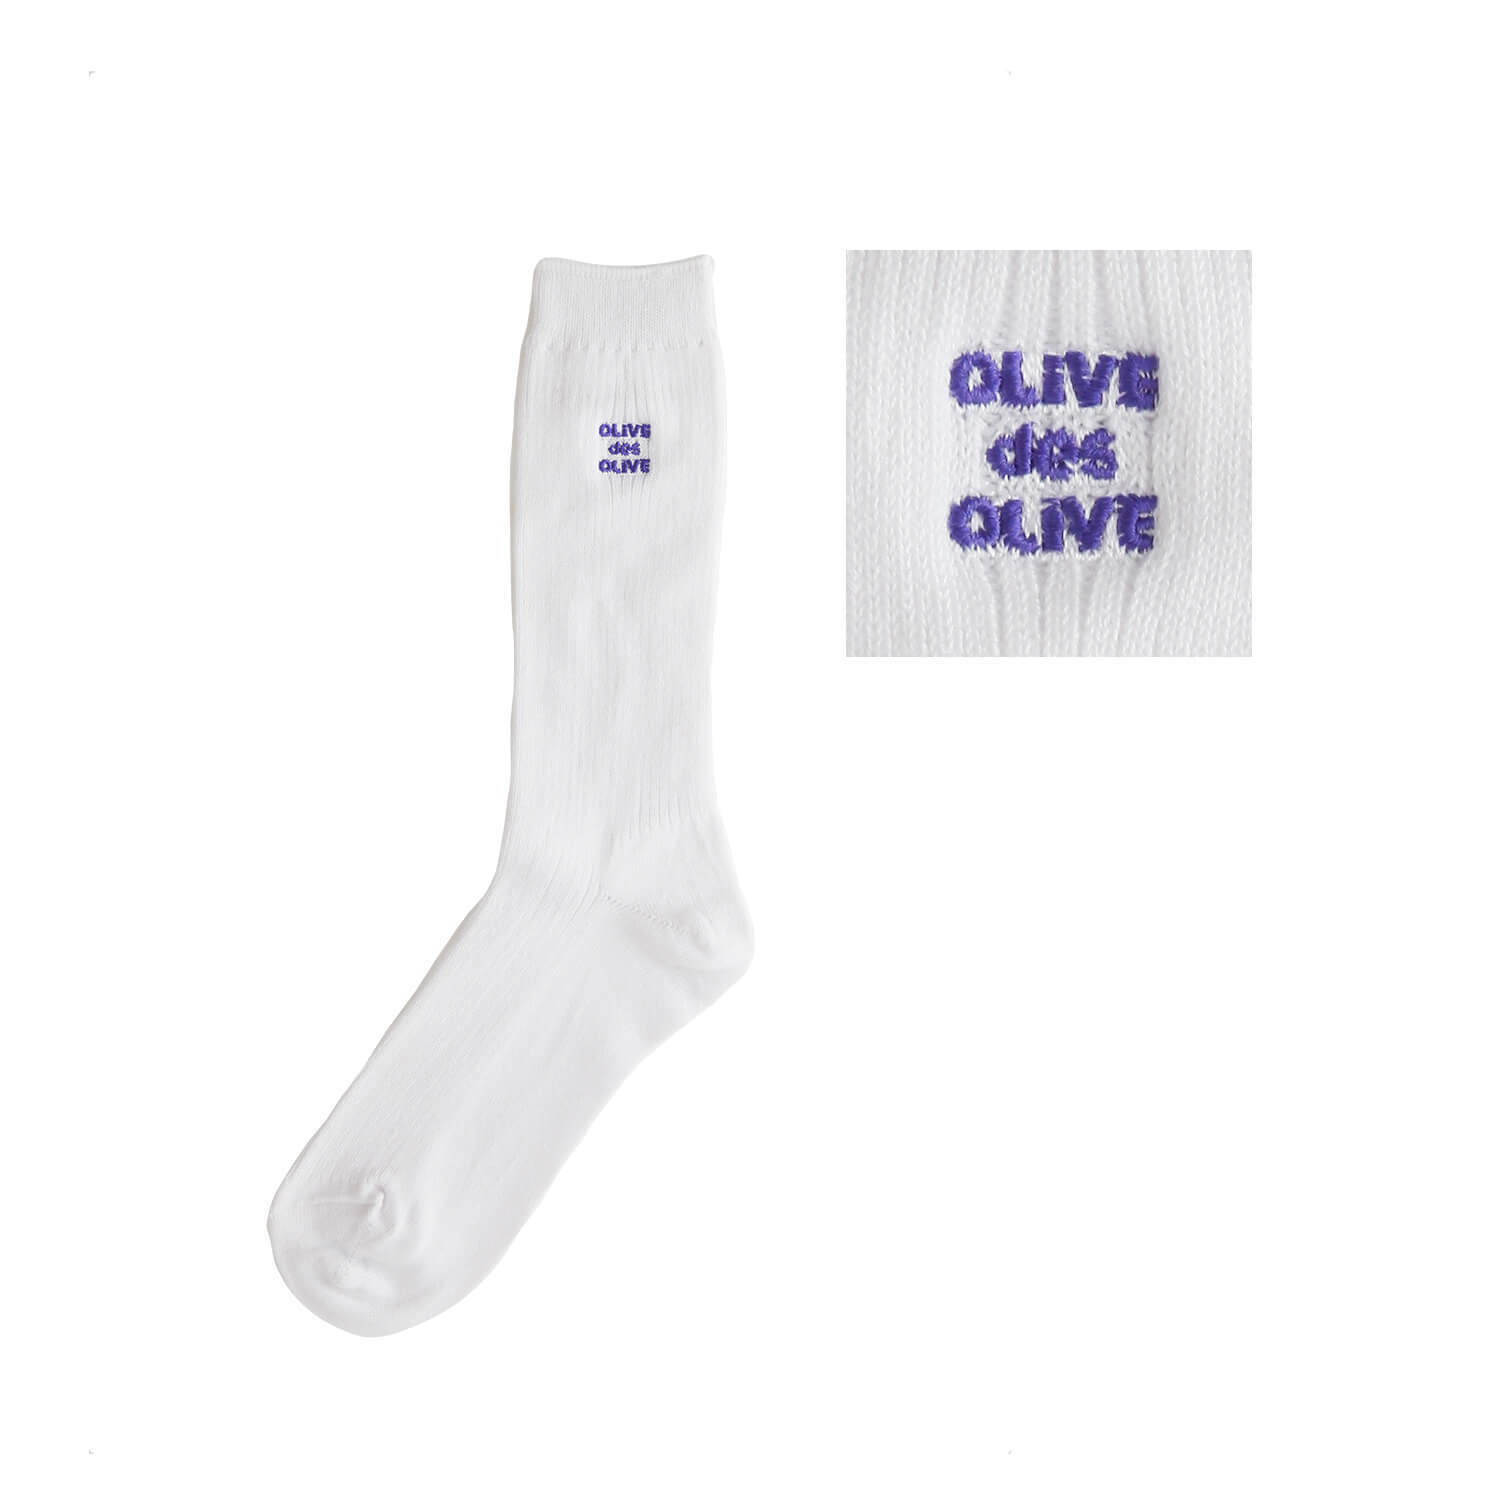 OLIVE des OLIVEのポップなロゴ刺繍入りの白ソックス。刺繍カラー-65紫